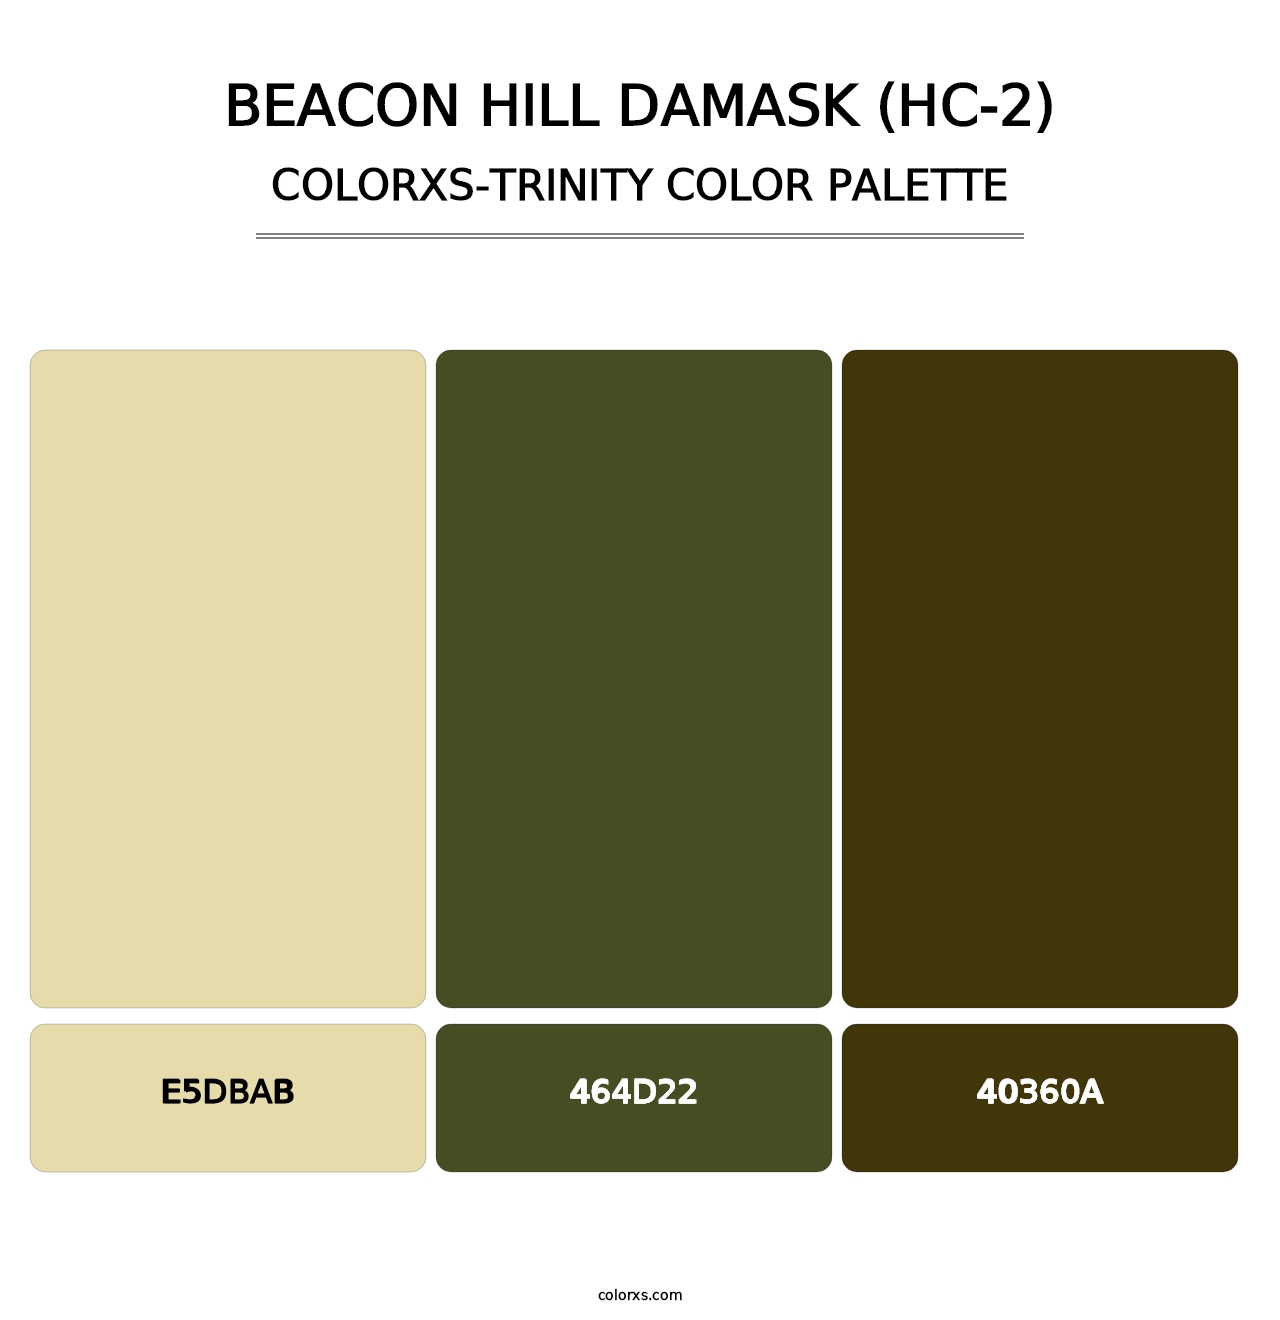 Beacon Hill Damask (HC-2) - Colorxs Trinity Palette